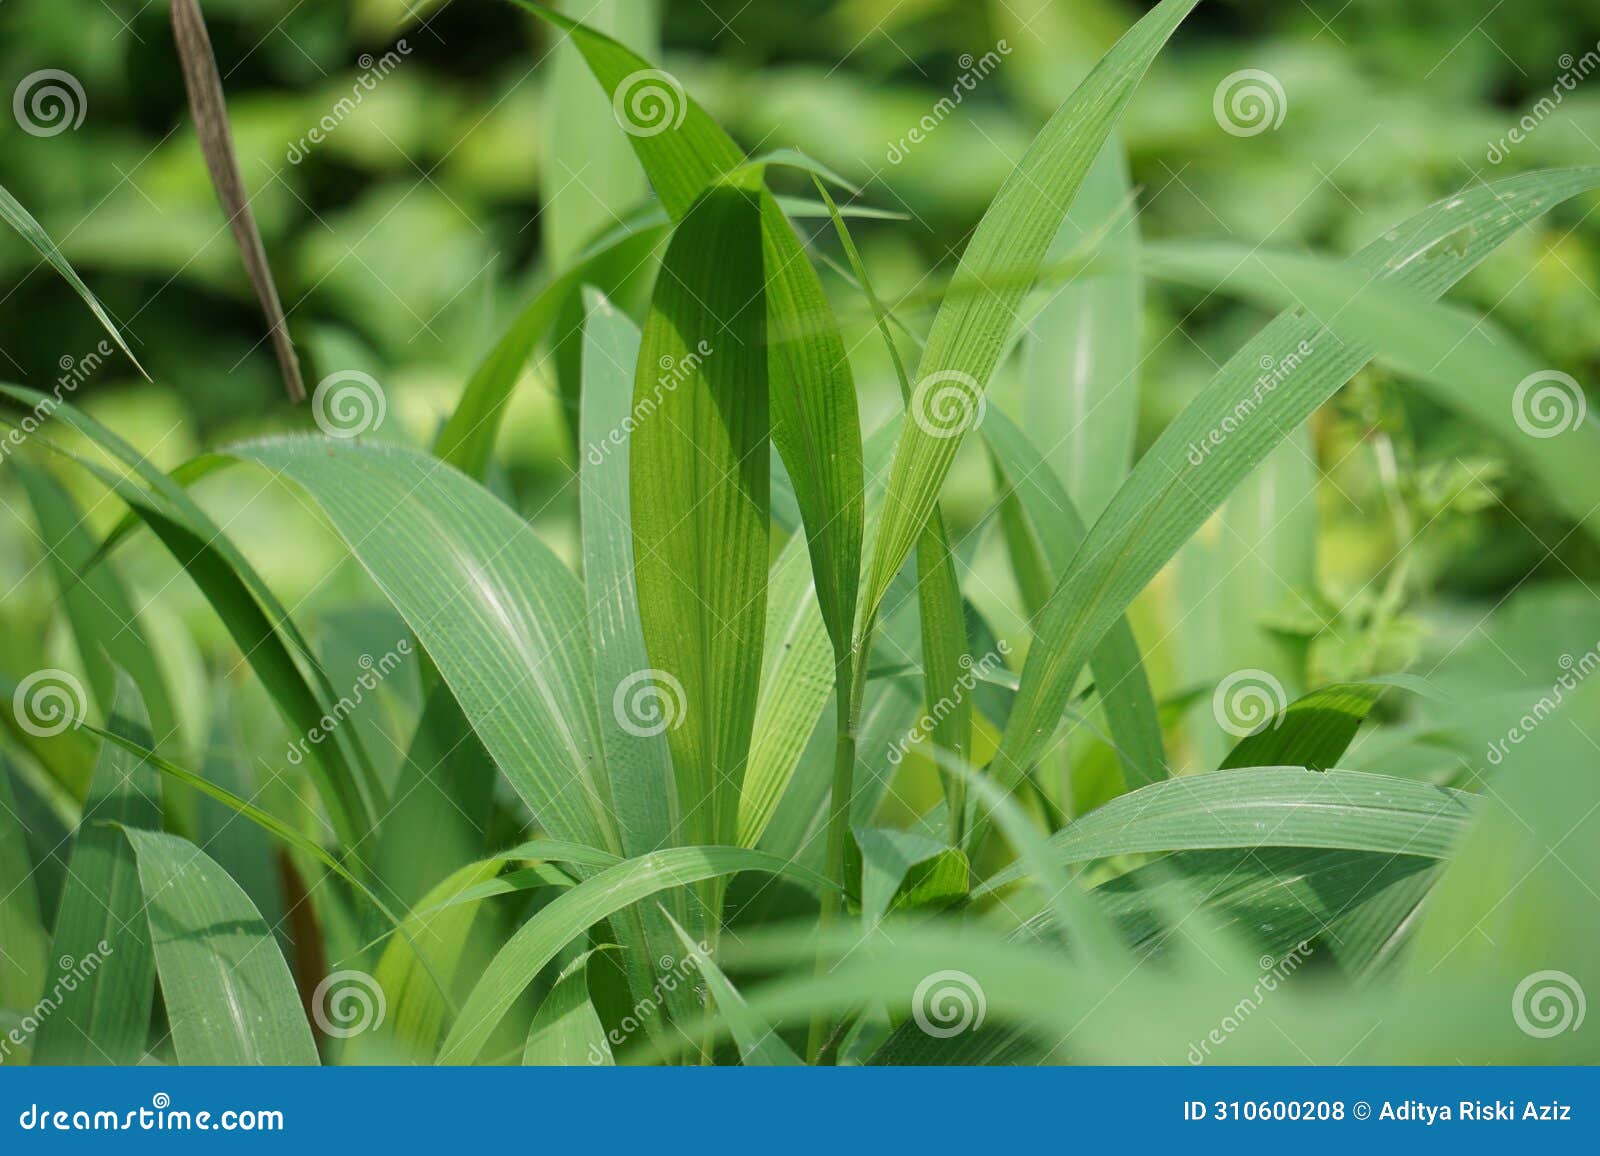 setaria palmifolia (rumput setaria, jamarak, palmgrass, highland) grass.